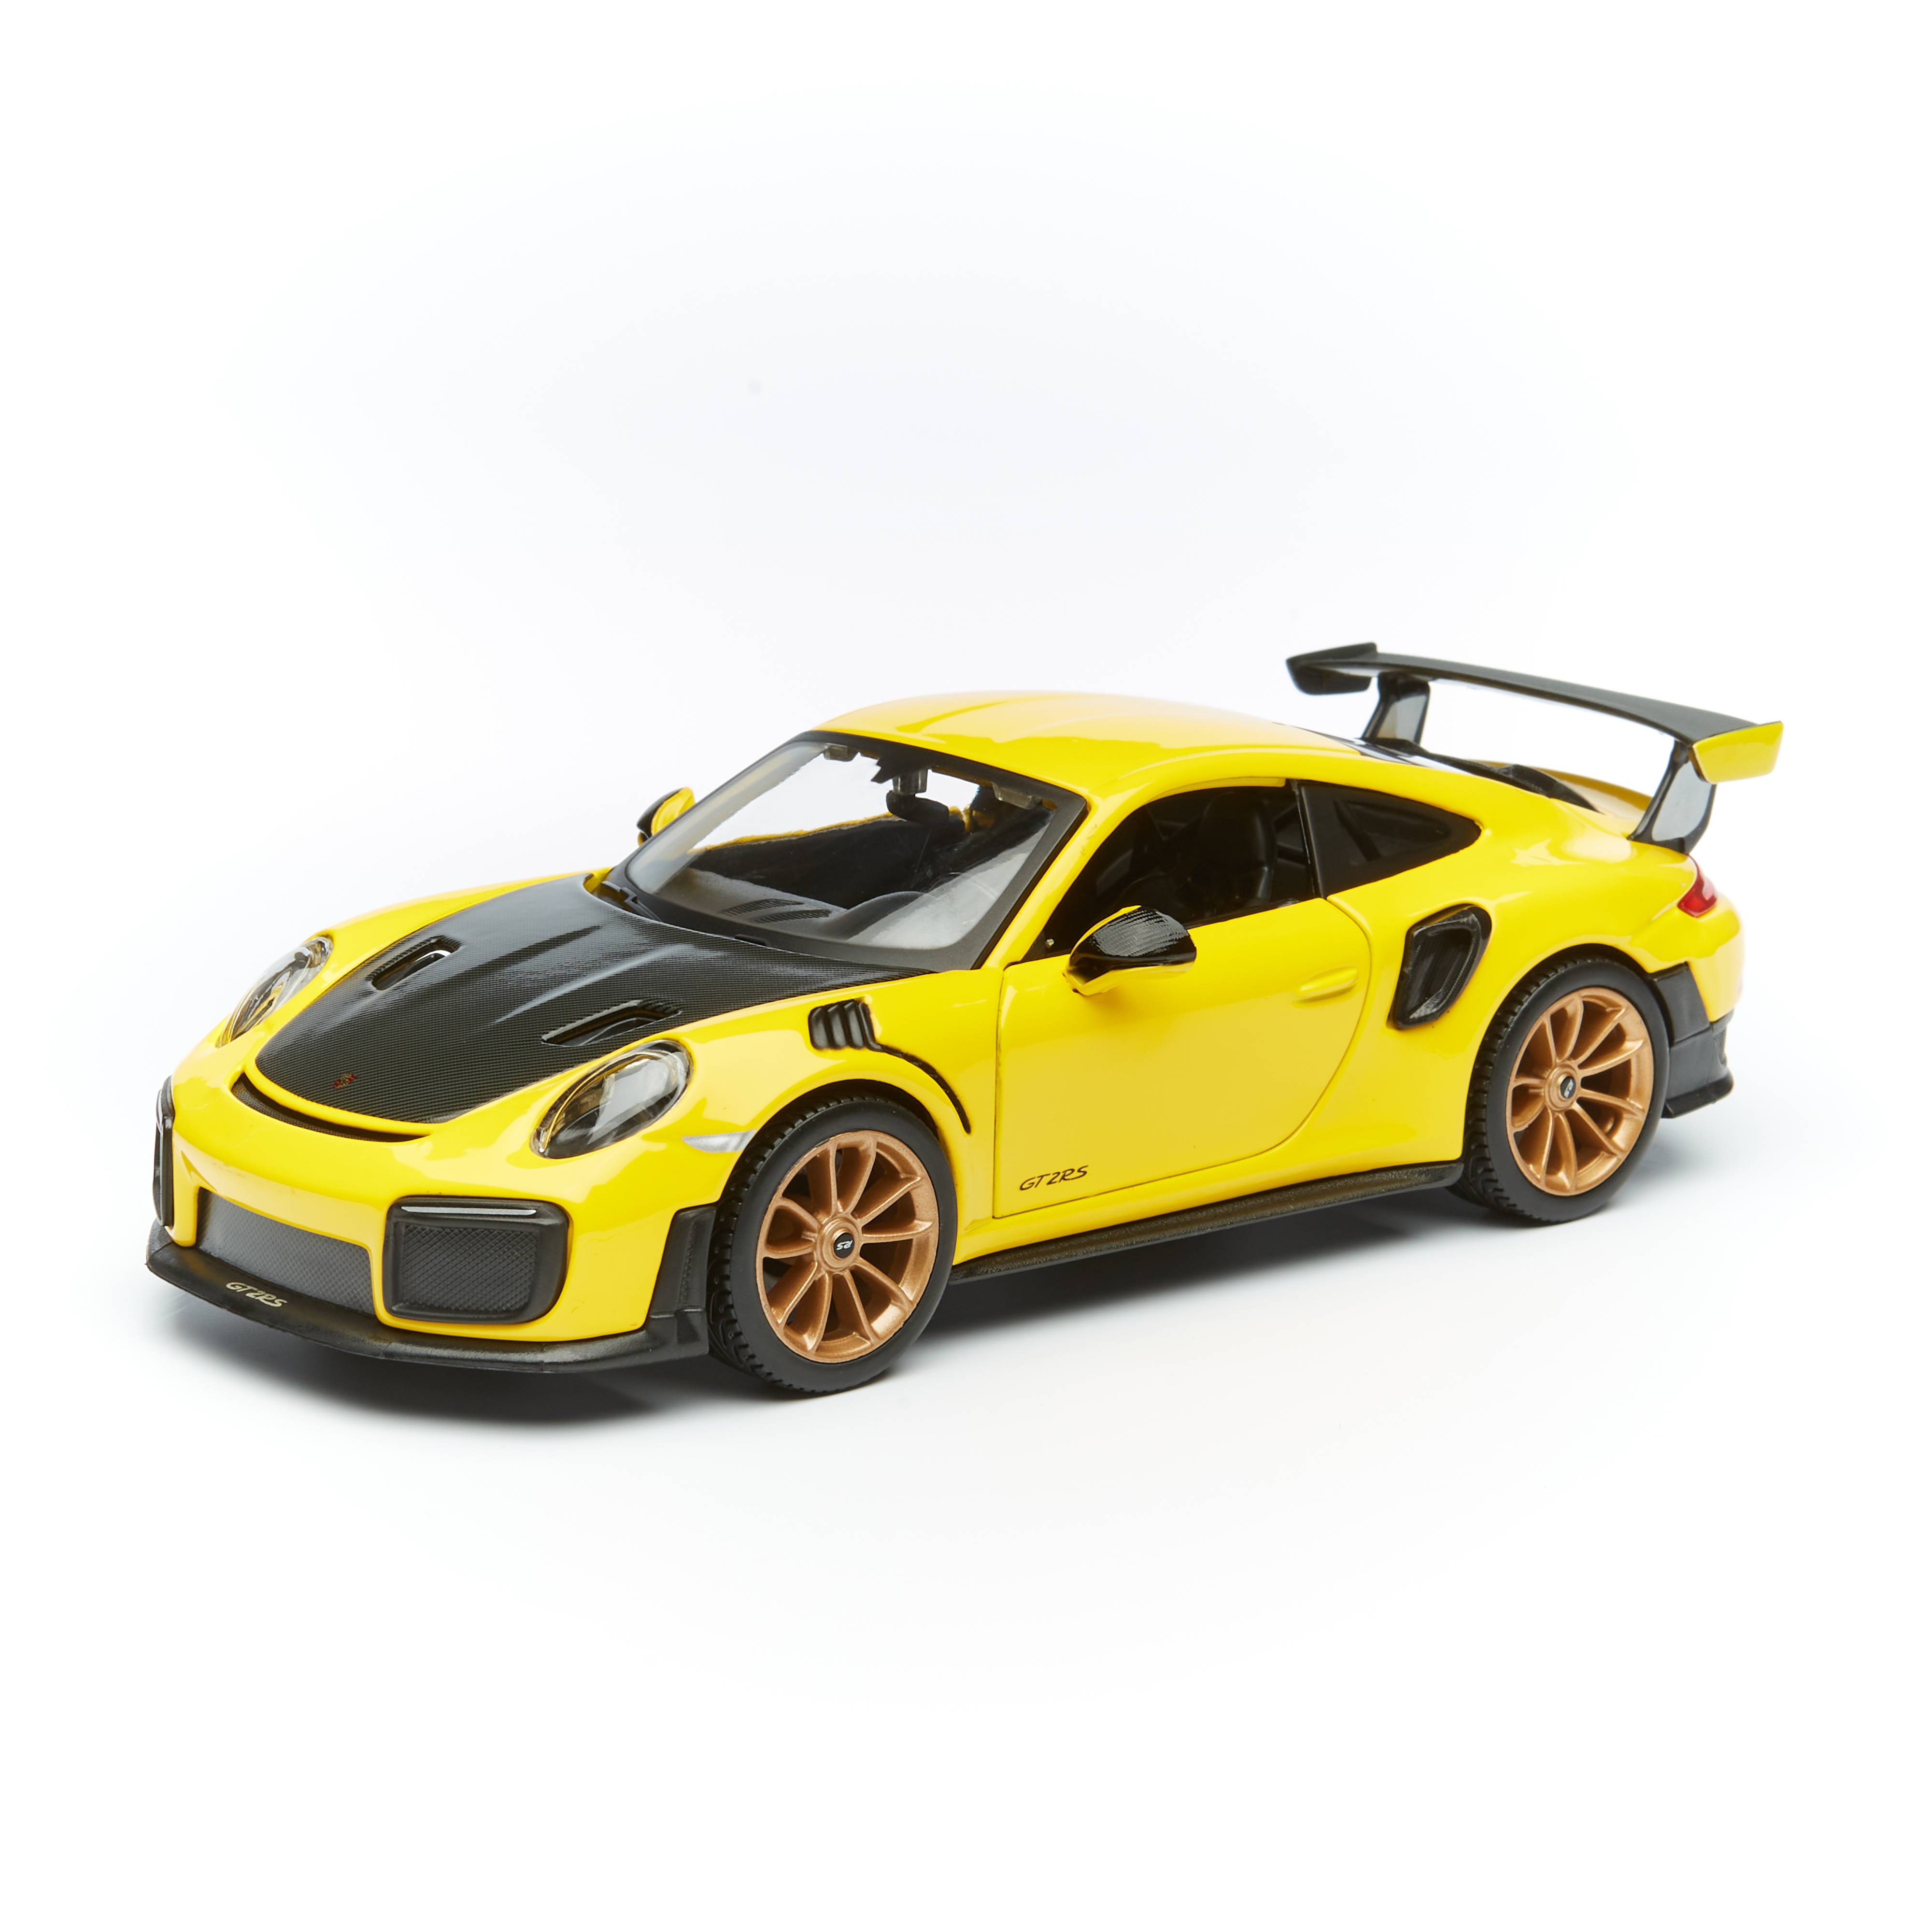 Maisto Машинка металлическая 1:24 PORSCHE 911 GT2 RS, желтый, 31523 31523